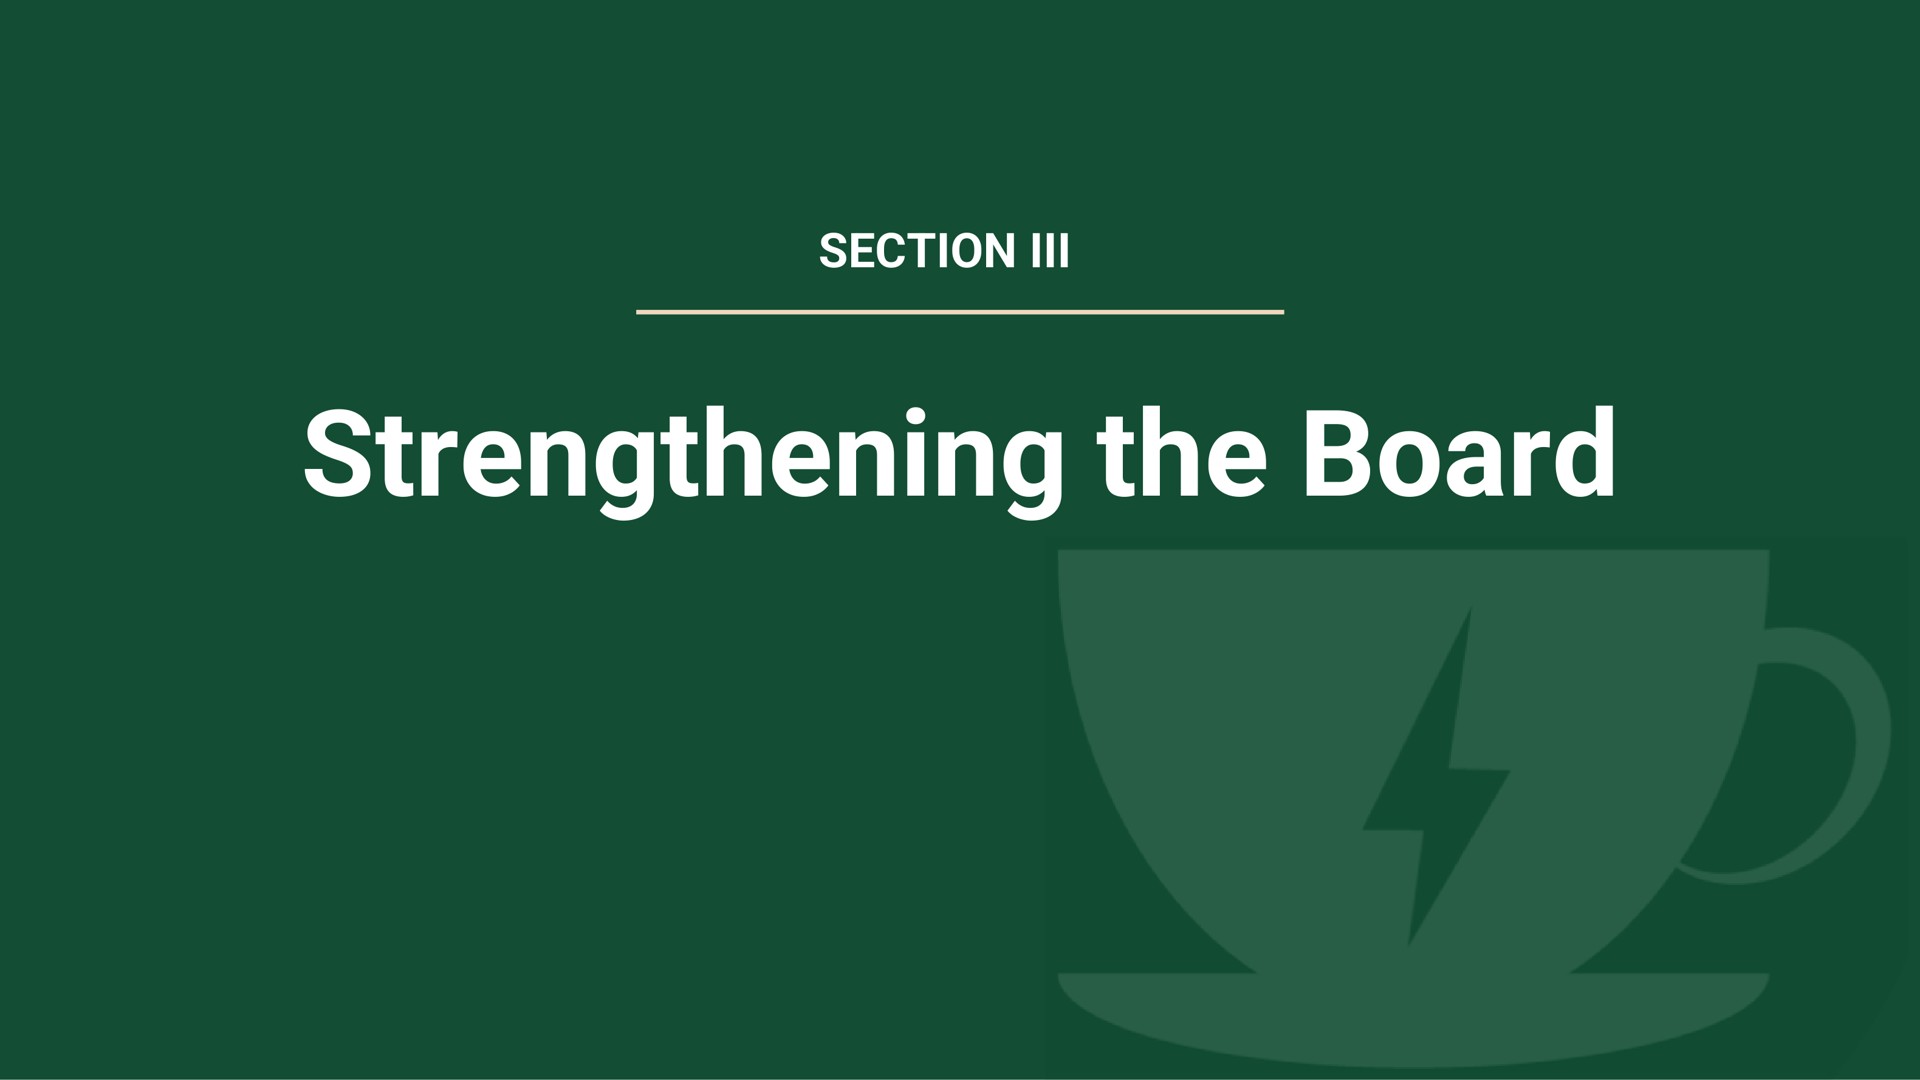 section strengthening the board | Strategic Organizing Center